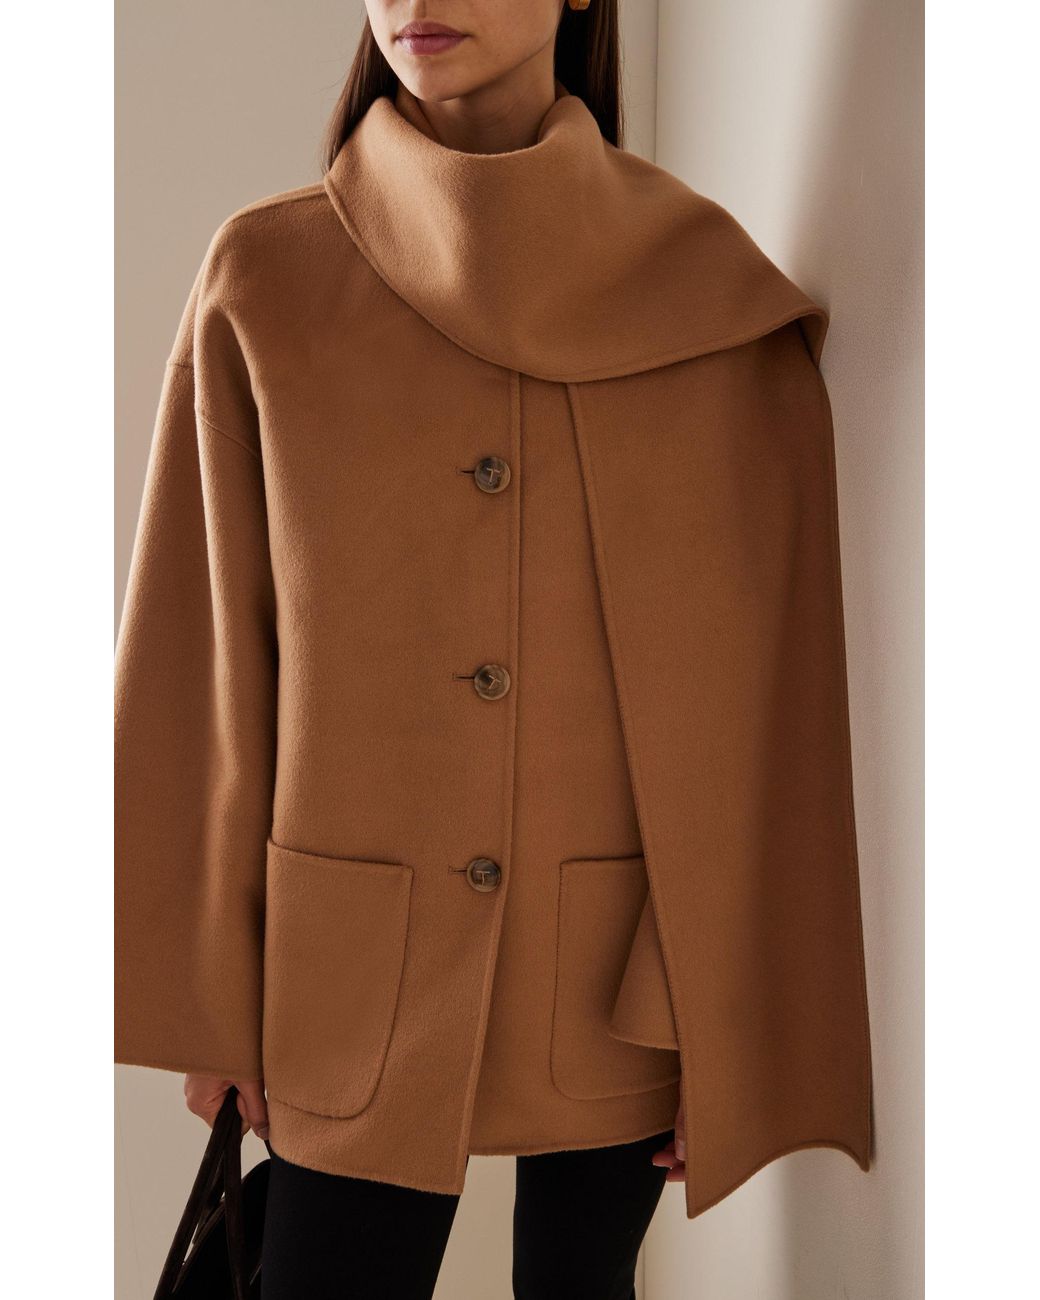 Totême Double-scarf Wool Jacket in Brown | Lyst